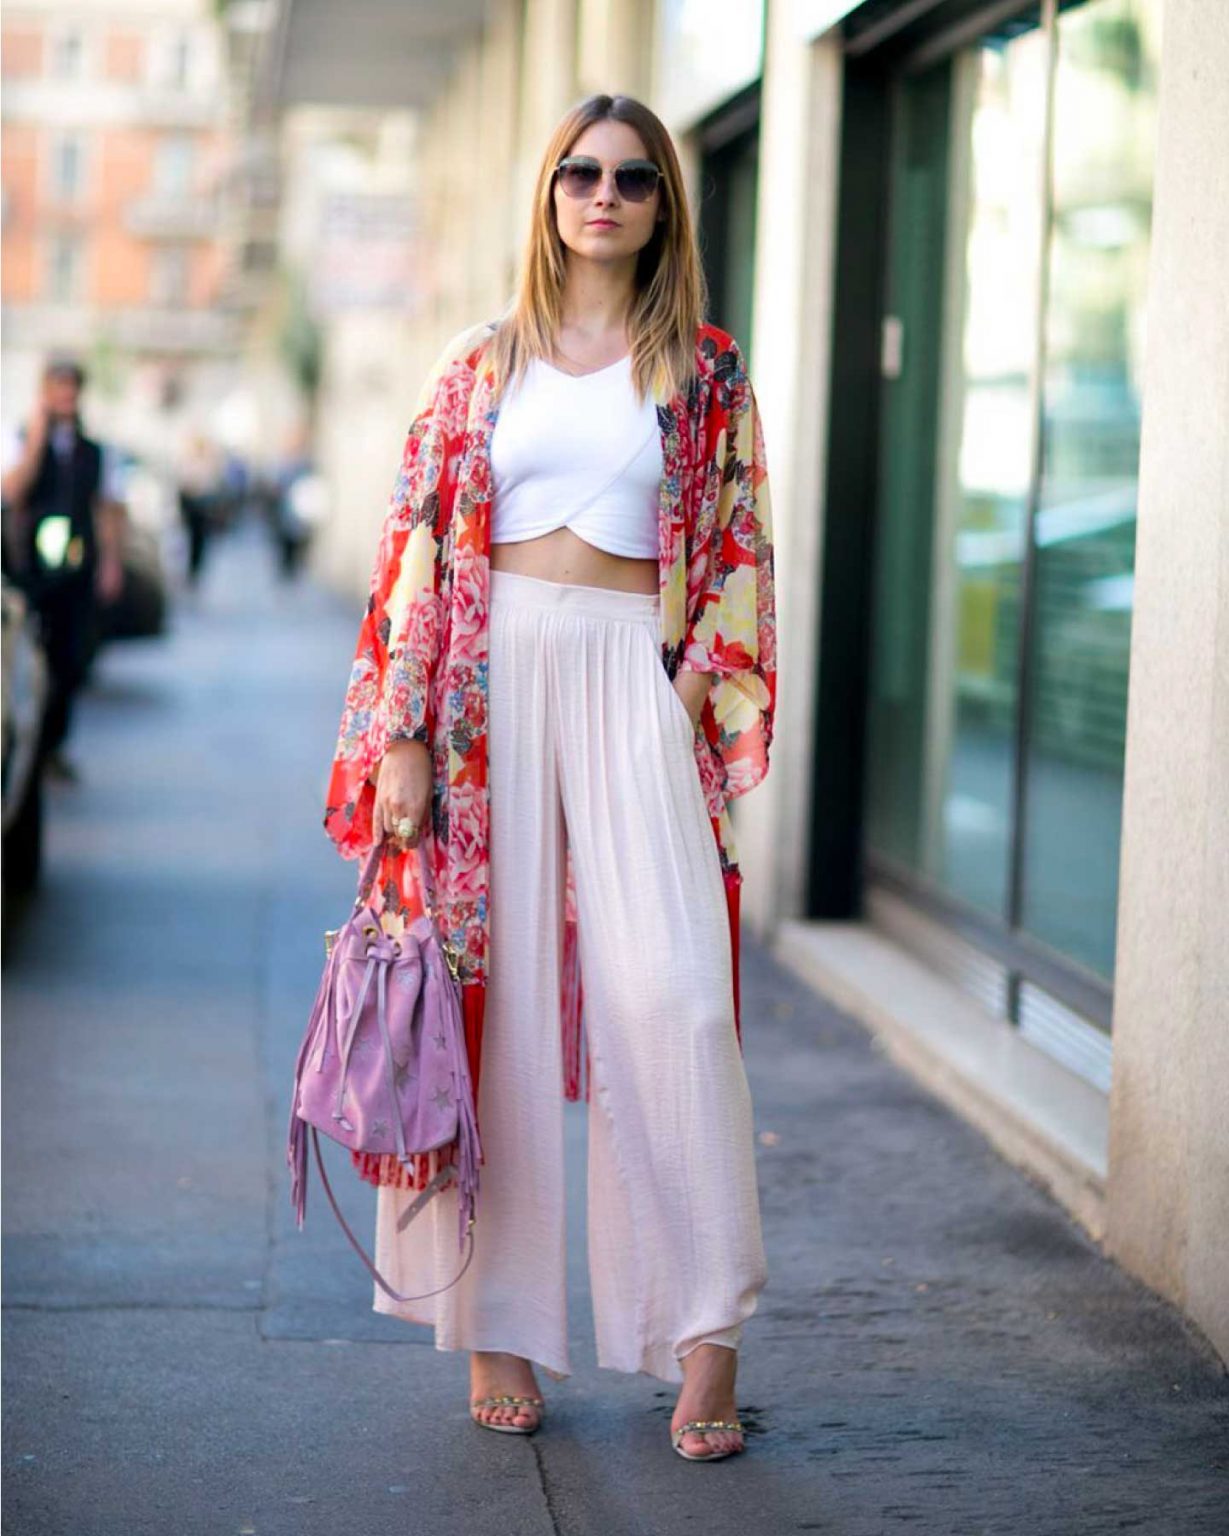 How to wear a kimono in style - Lookiero Blog